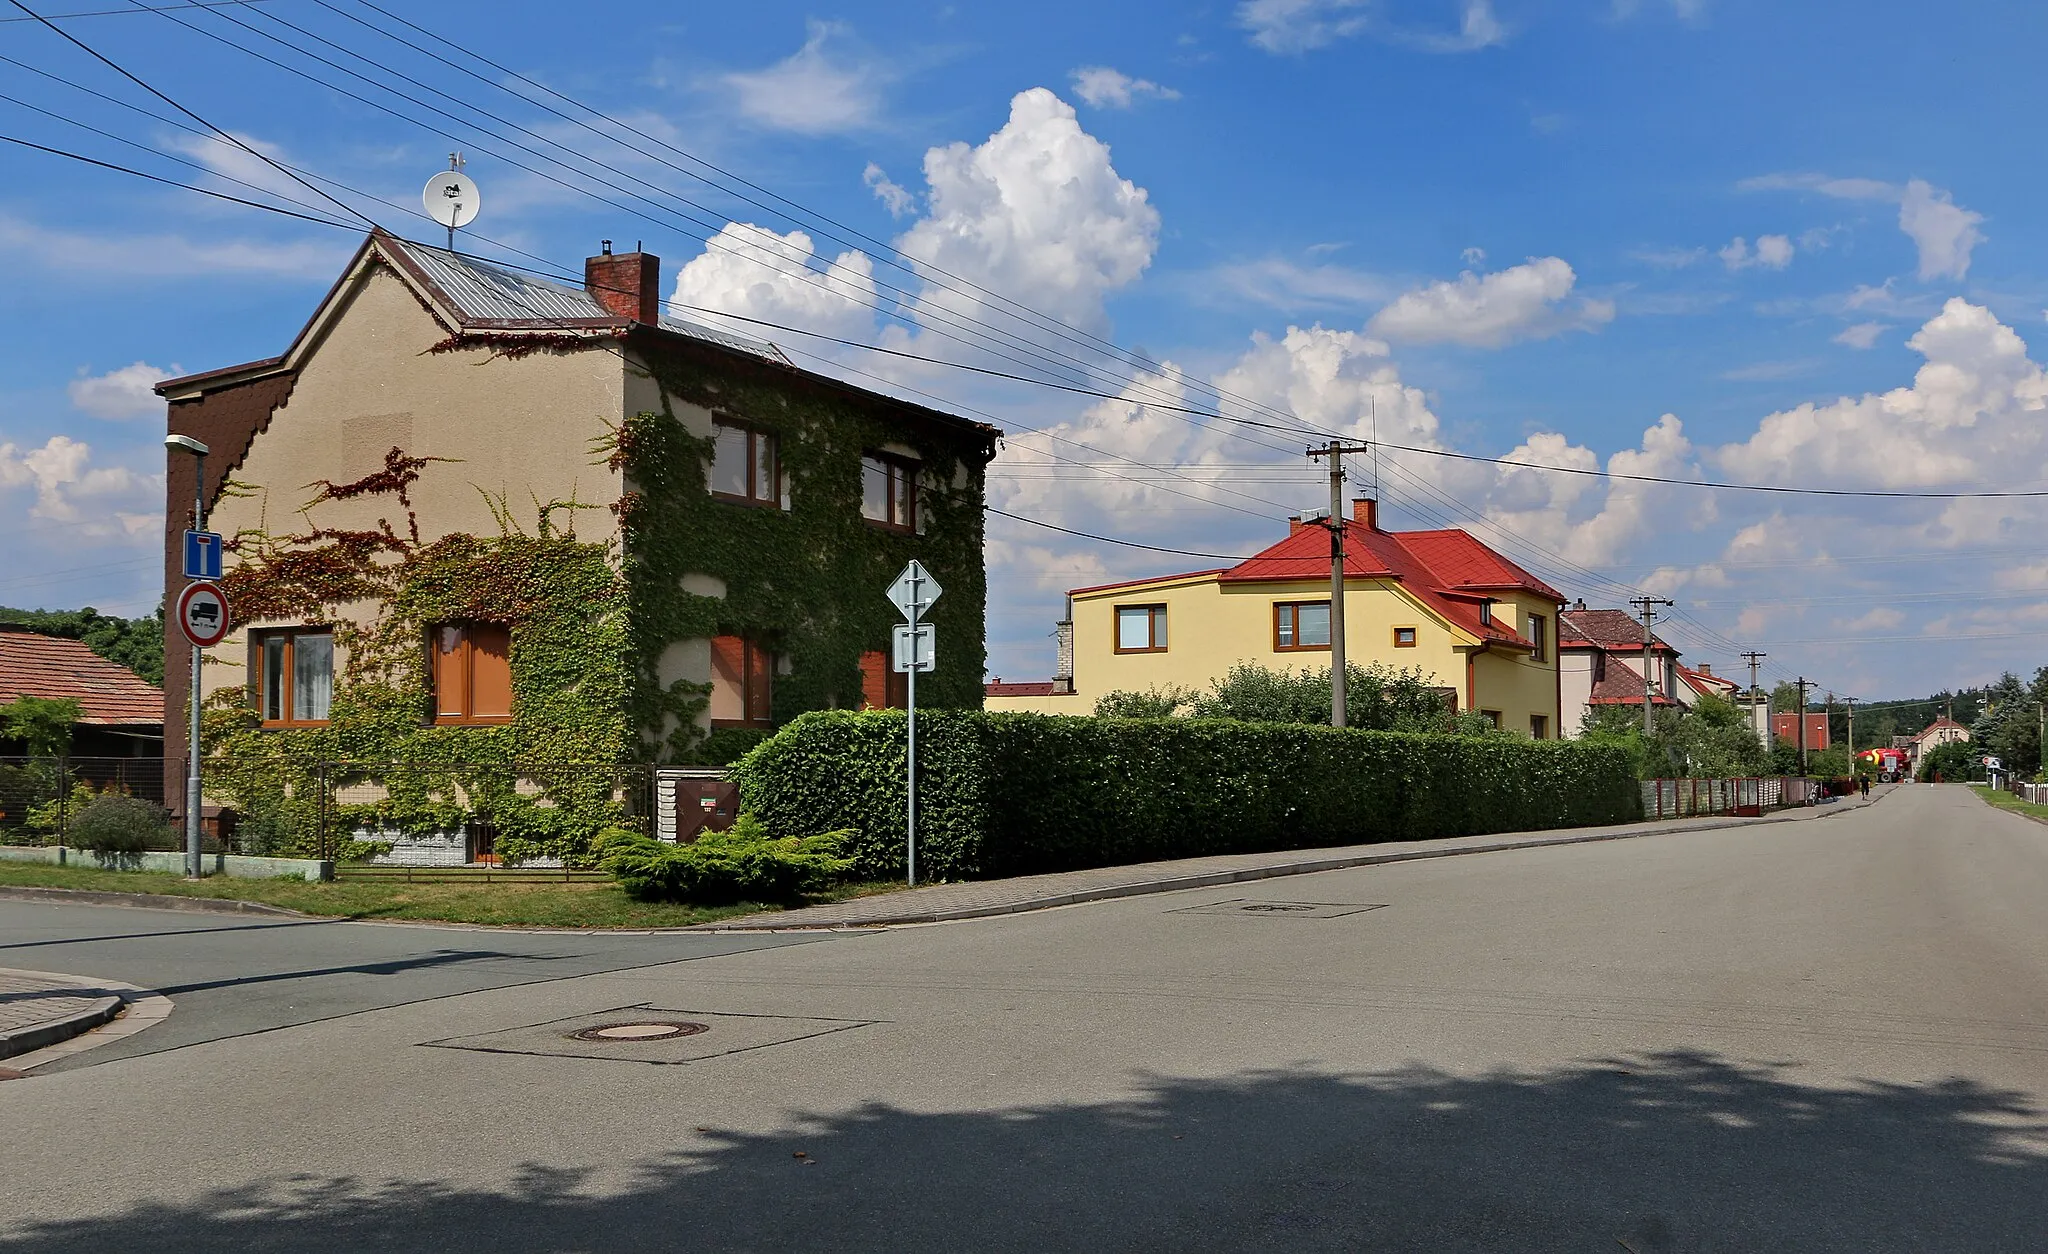 Photo showing: House No 137 in Lípa nad Orlicí, Czech Republic.